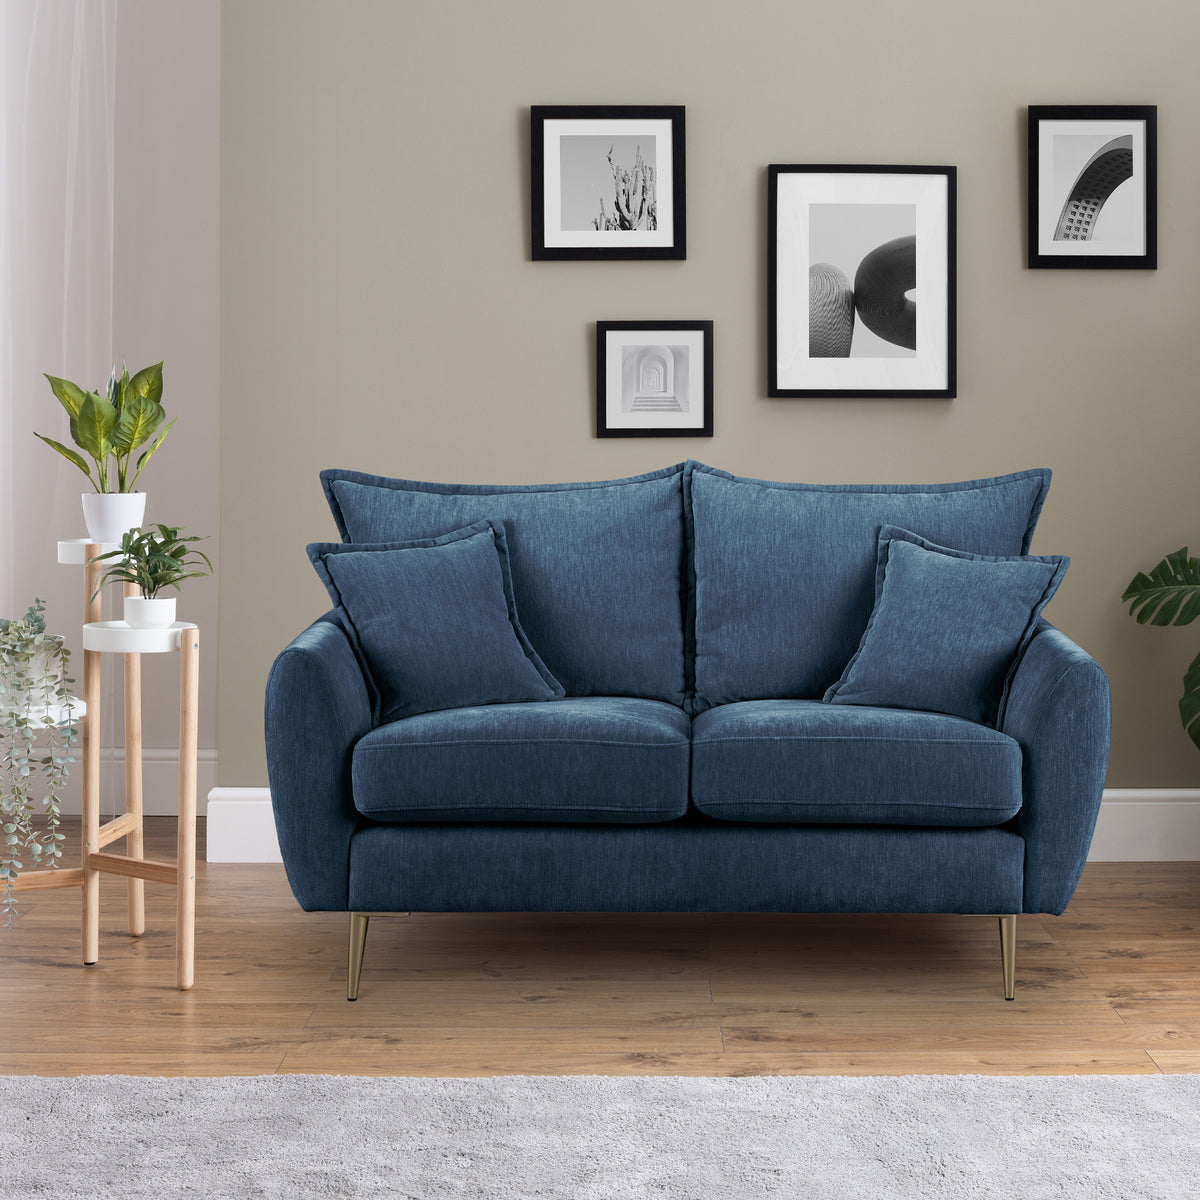 Evelyn Navy Blue 2 Seater Sofa for living room